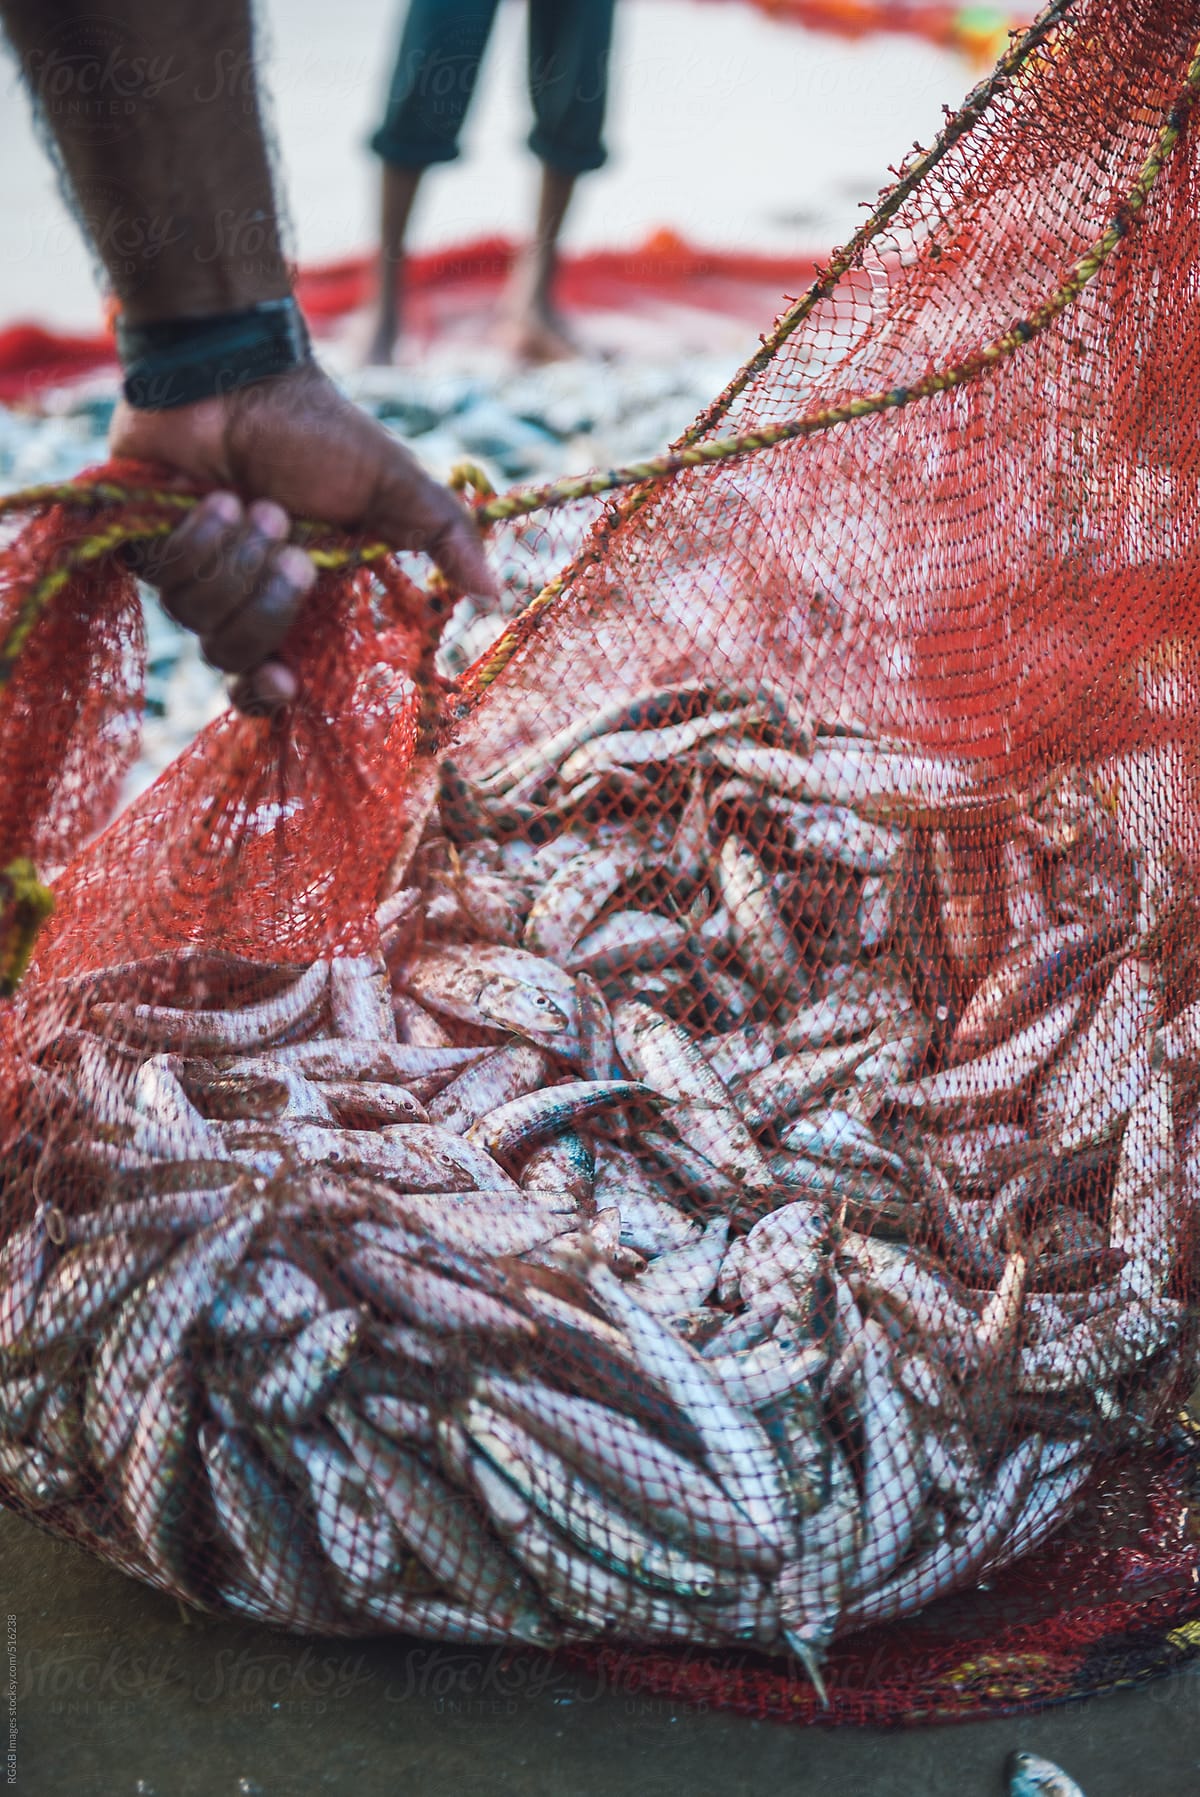 Caring A Fishnet Full Of Fish by Stocksy Contributor Ibex.media - Stocksy